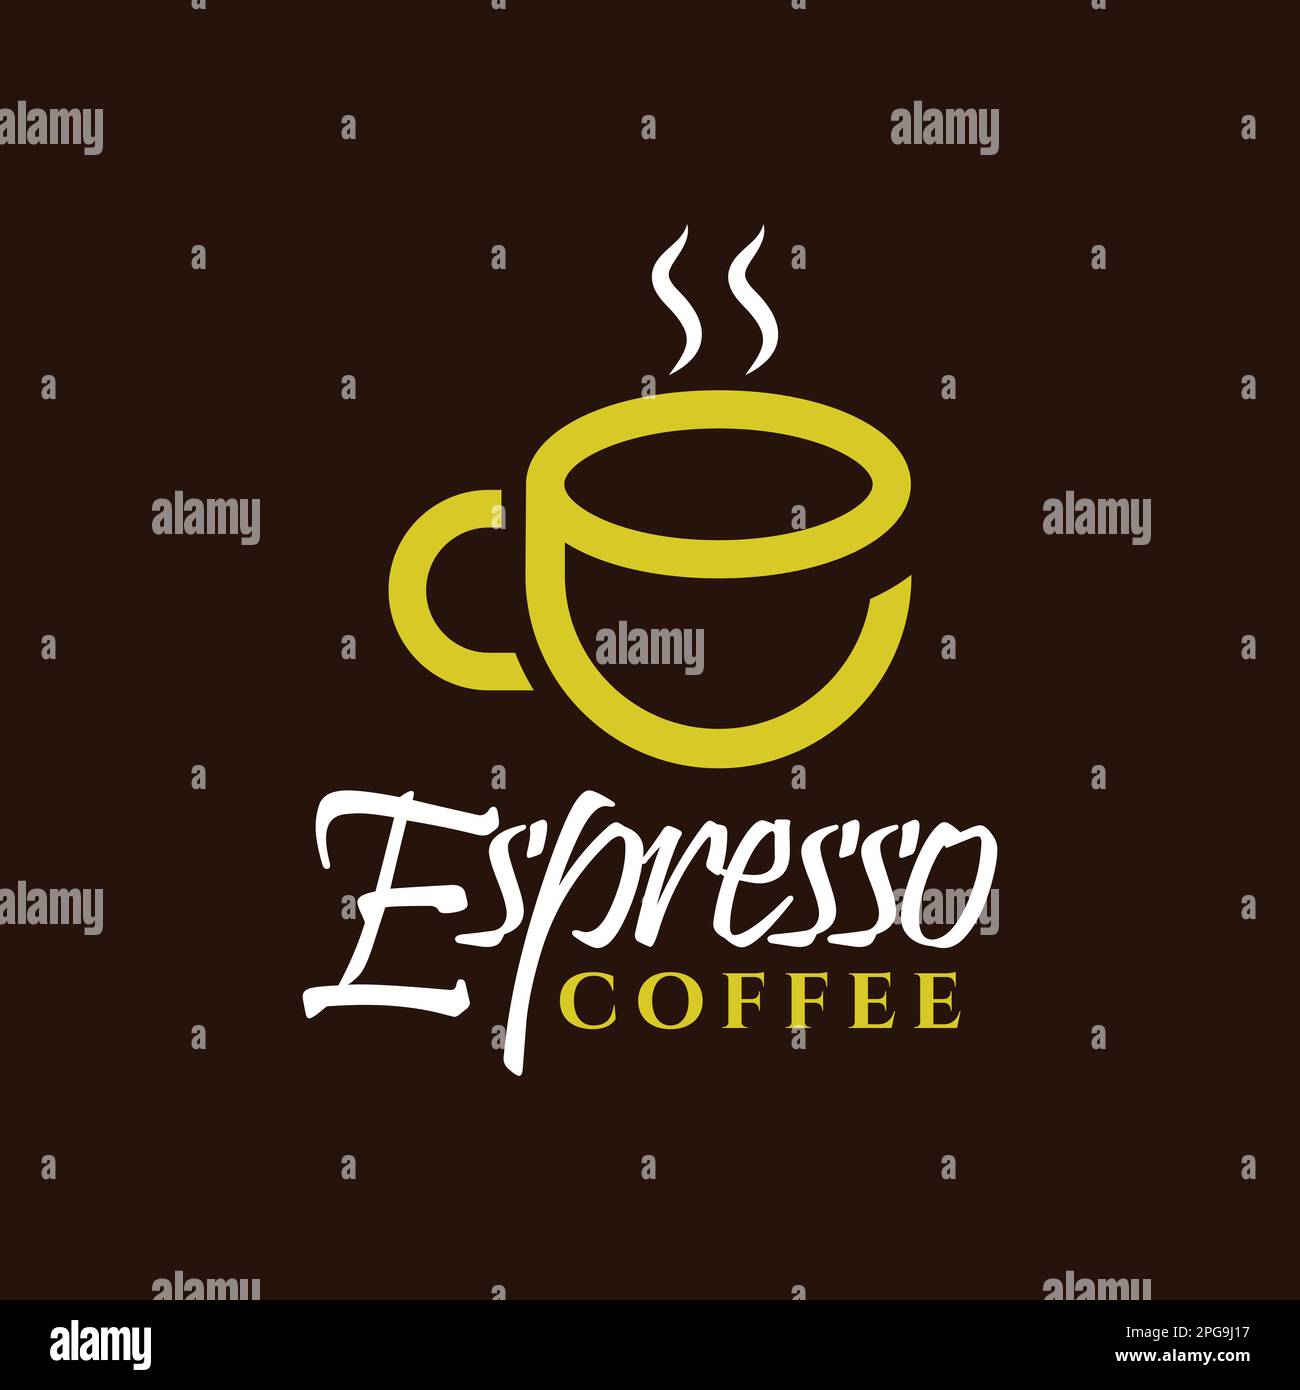 Logo für Espresso-Kaffee C E Becher Tasse heißer Tee Café Getränke Stock Vektor